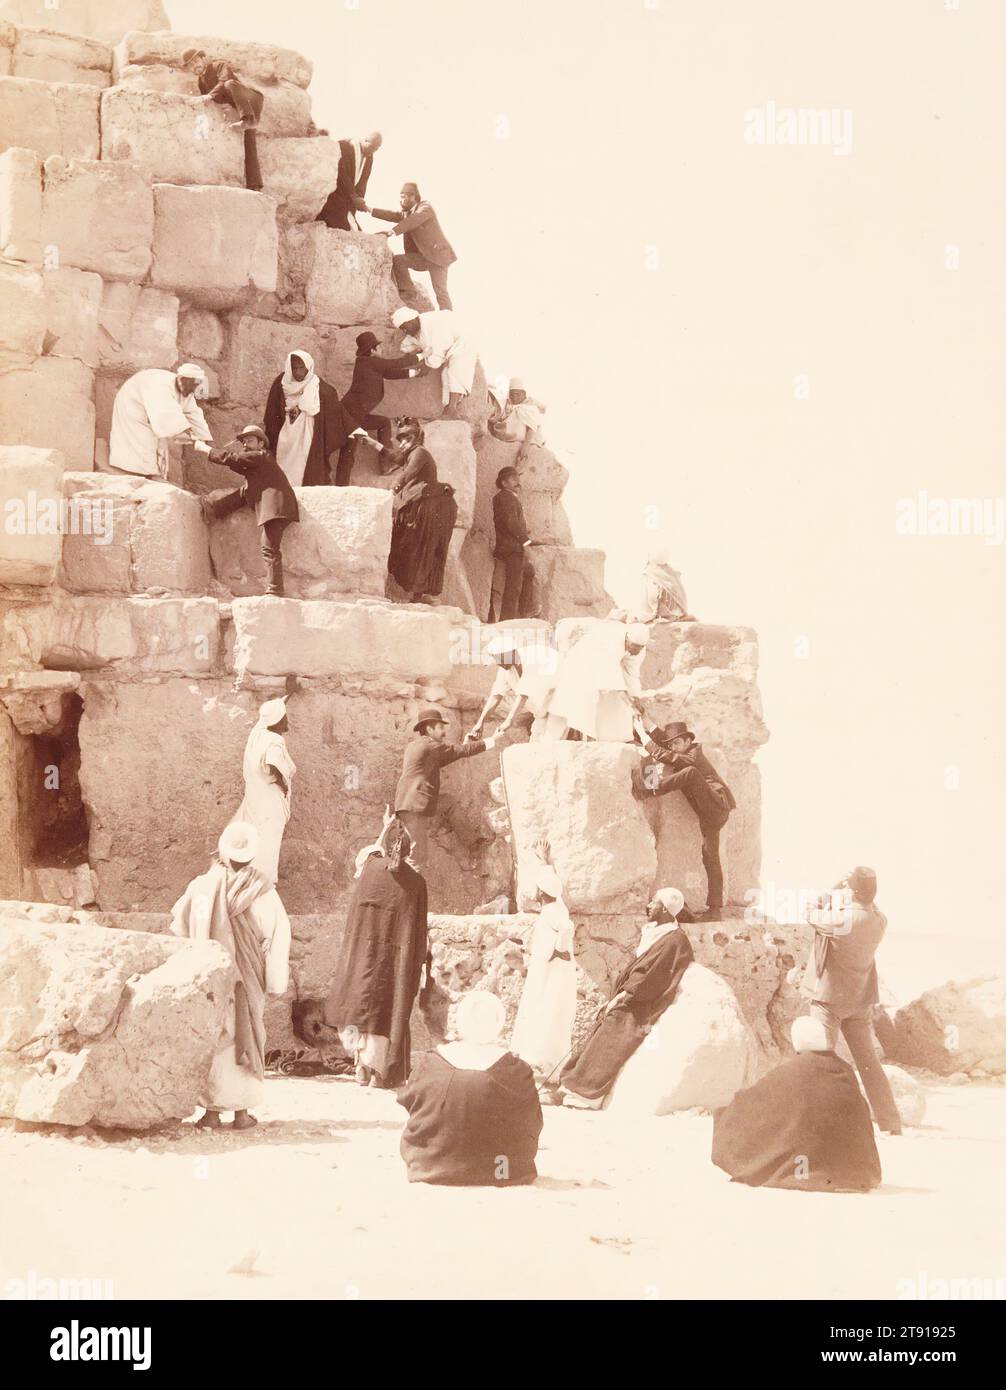 Ascension de Pyramide, 19th century, Abdullah Frères, Turkish, 9 15/16 x 7 11/16 in. (25.24 x 19.53 cm) (image)14 x 11 in. (35.56 x 27.94 cm) (mount), Albumen print, Turkey, 19th century Stock Photo